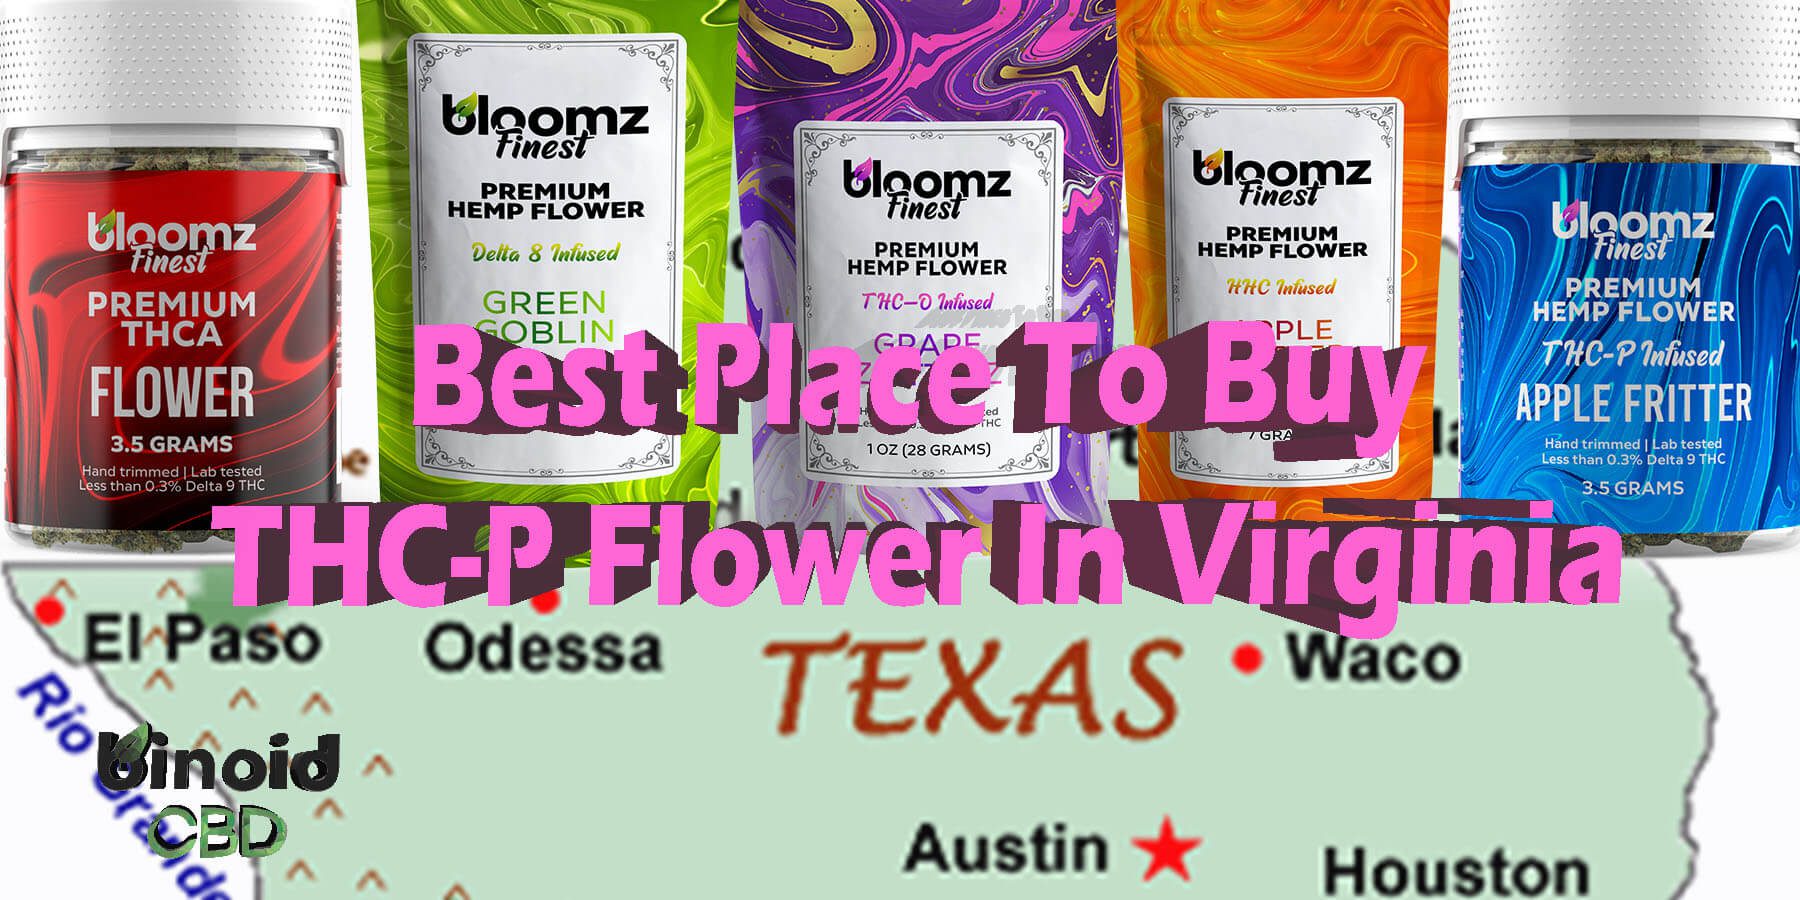 Buy THCP Hemp Flower Texas Pre Rolls Get Online Near Me For Sale Best Brand Strongest Real Legal Store Shop Reddit